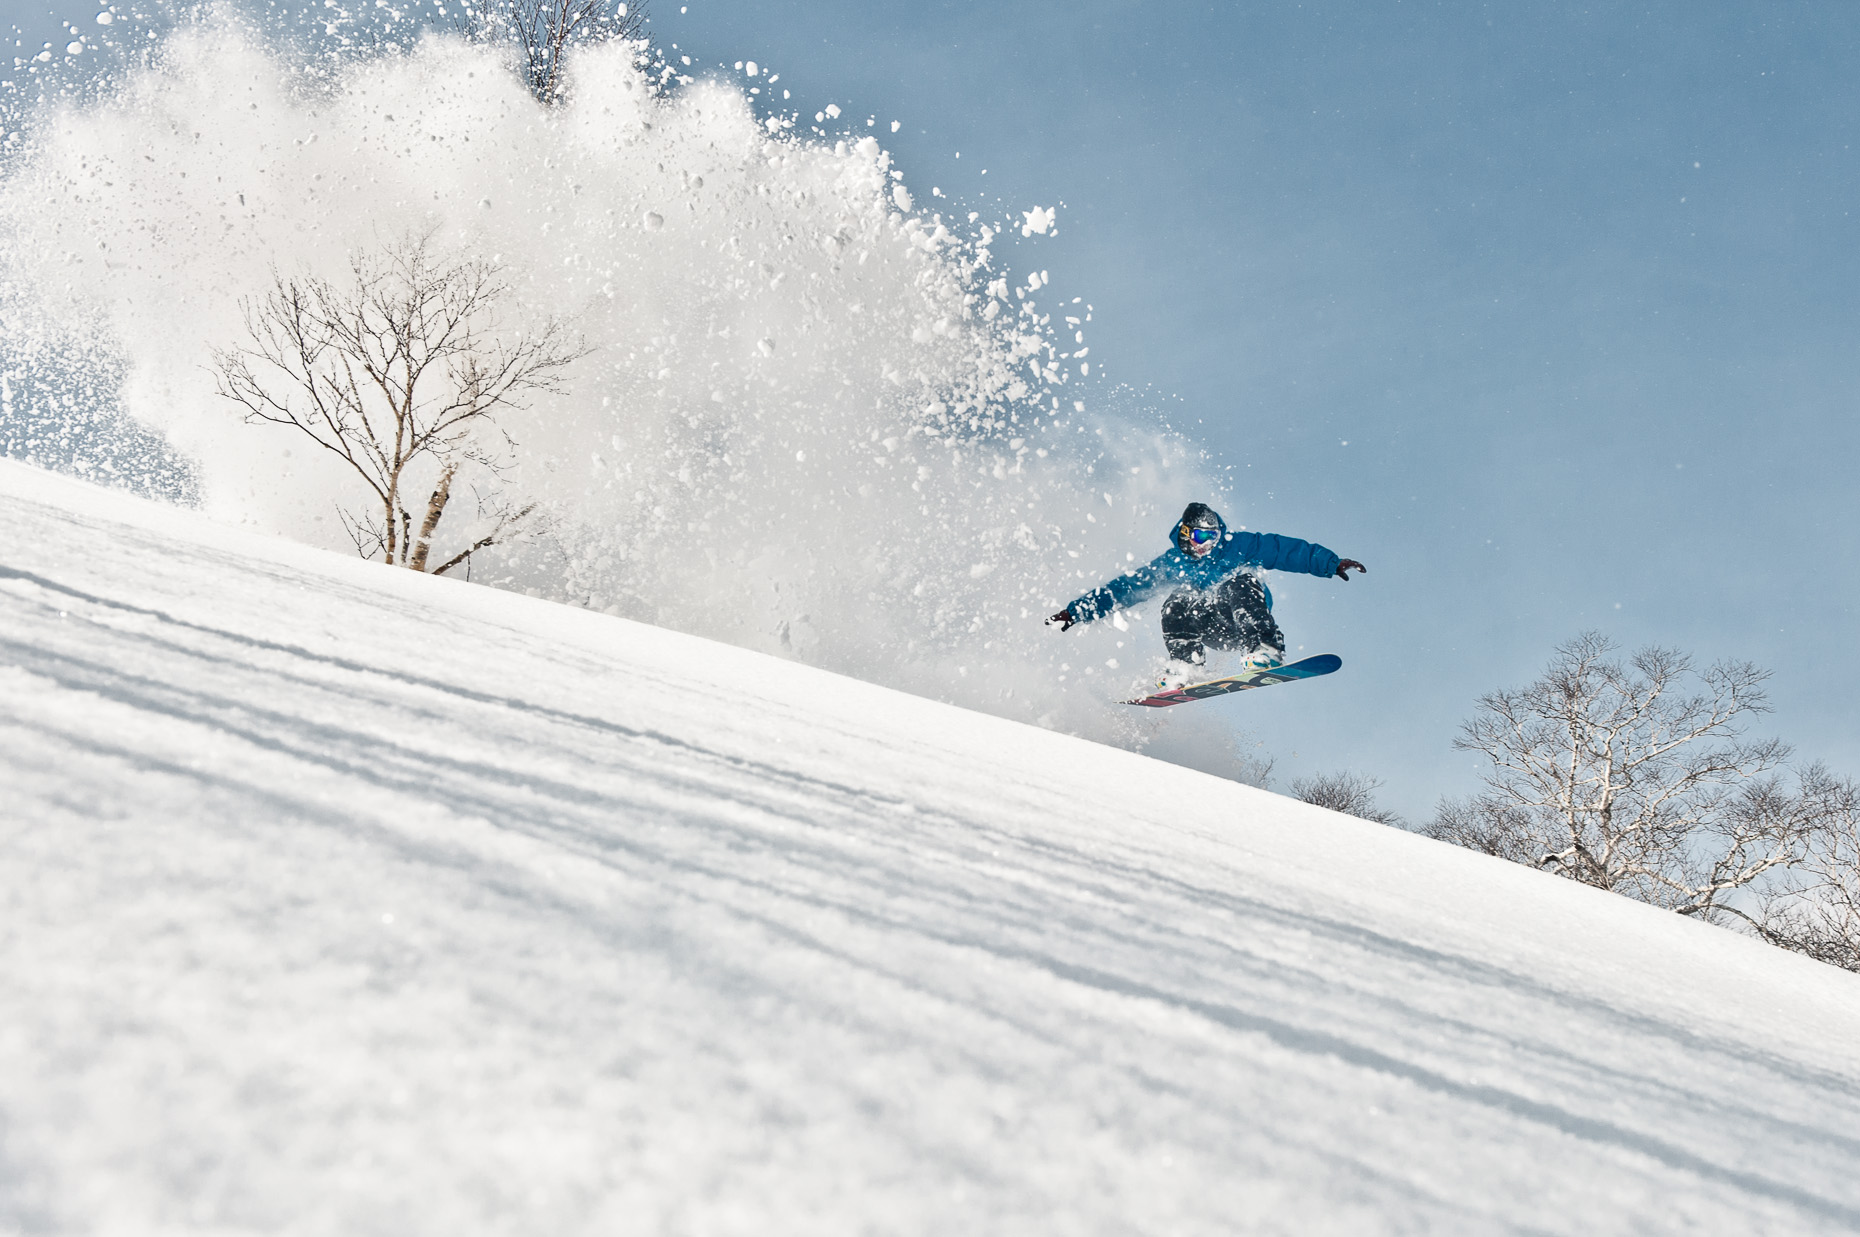 snowboarding_Shayne_Pospisil_Head_Japan_Trip_Feb_Mar_2010_c_Brecheis-1171-2.jpg